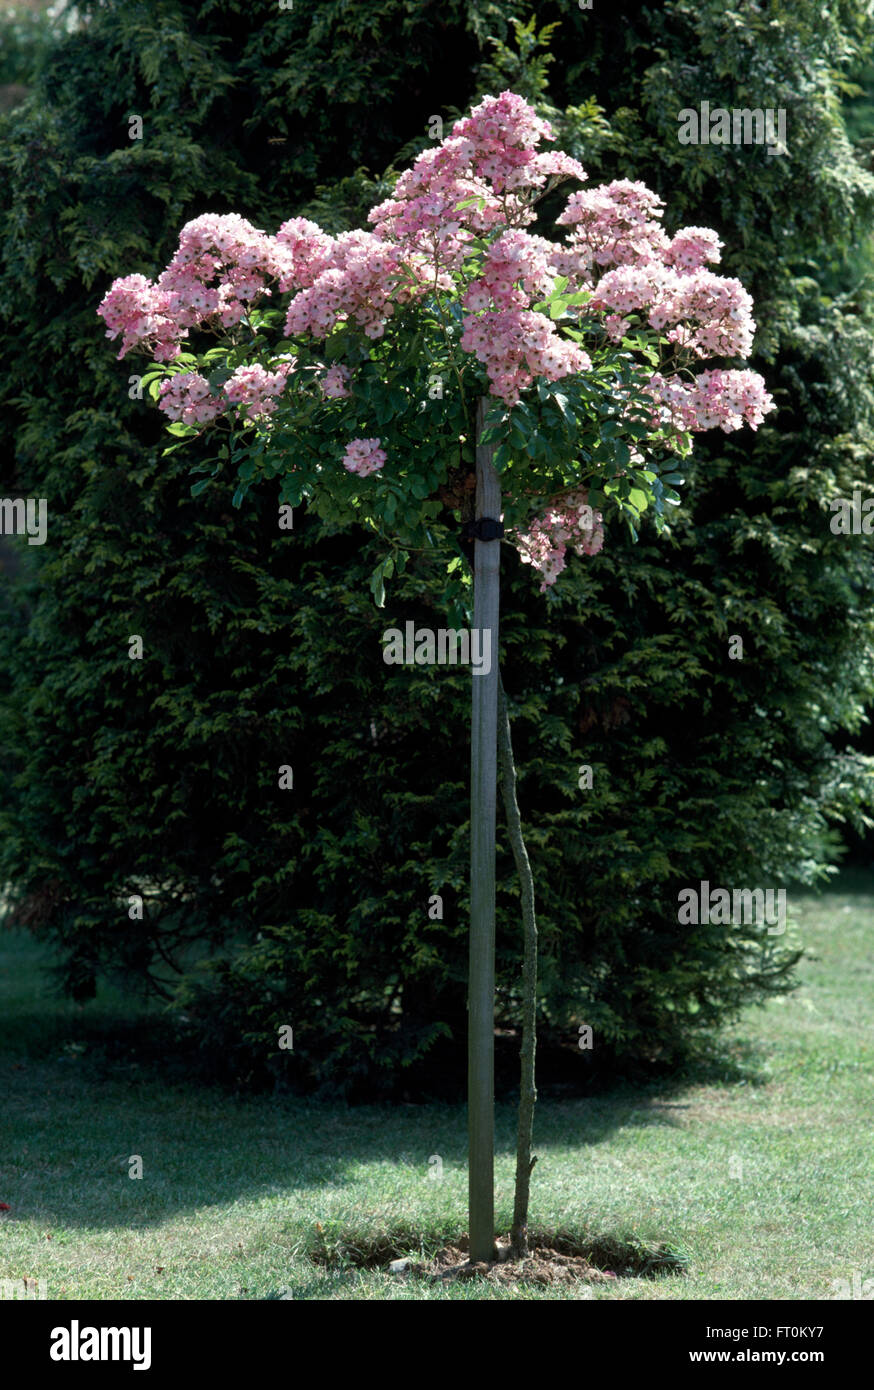 Rosenbaum -Fotos und -Bildmaterial in hoher Auflösung – Alamy